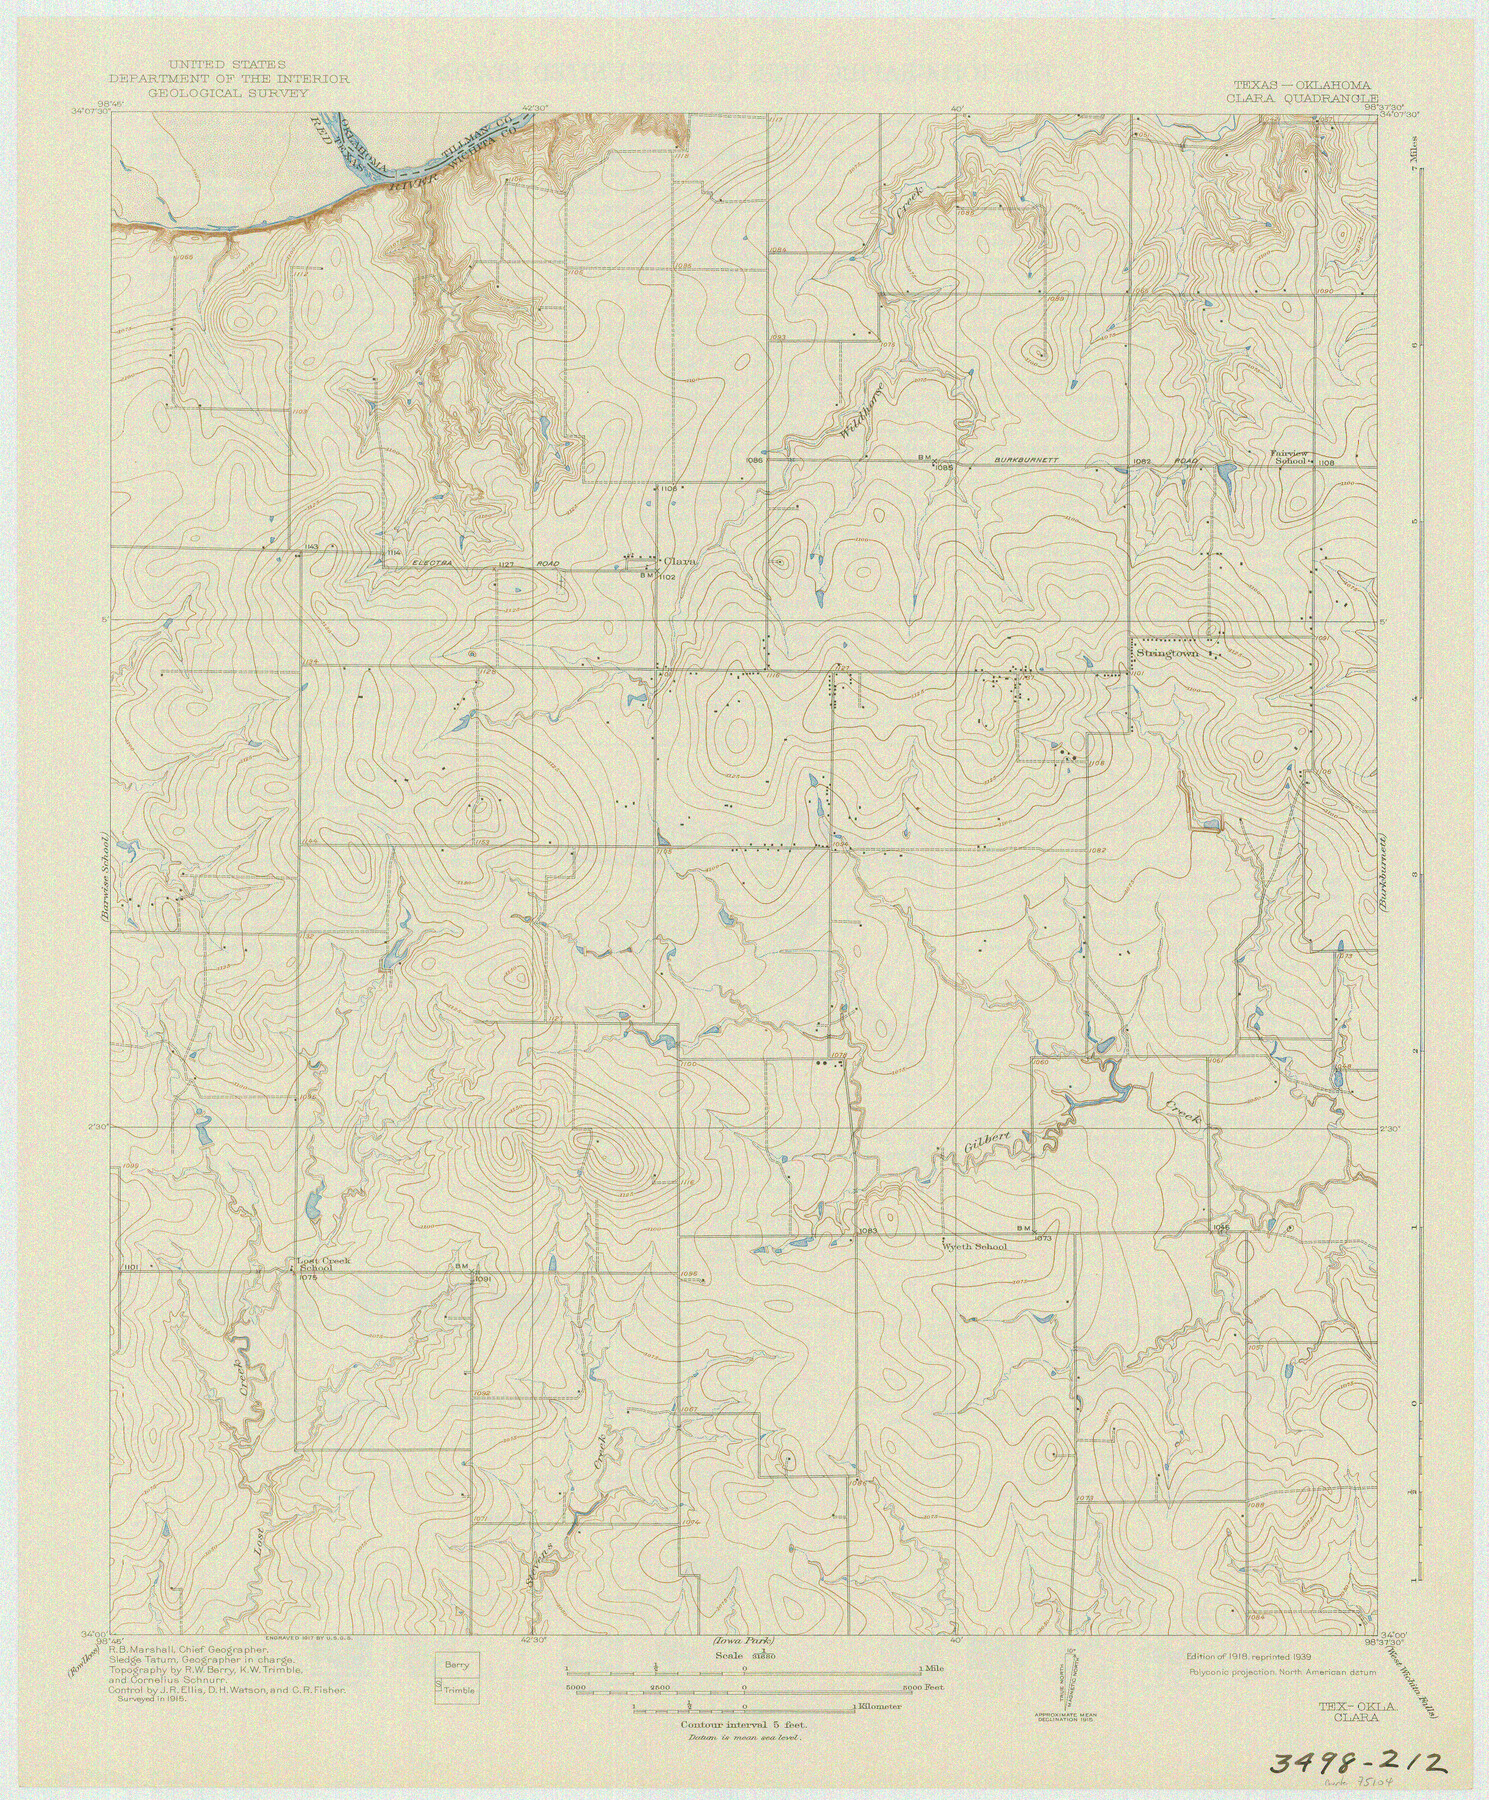 75104, Texas-Oklahoma Clara Quadrangle, General Map Collection